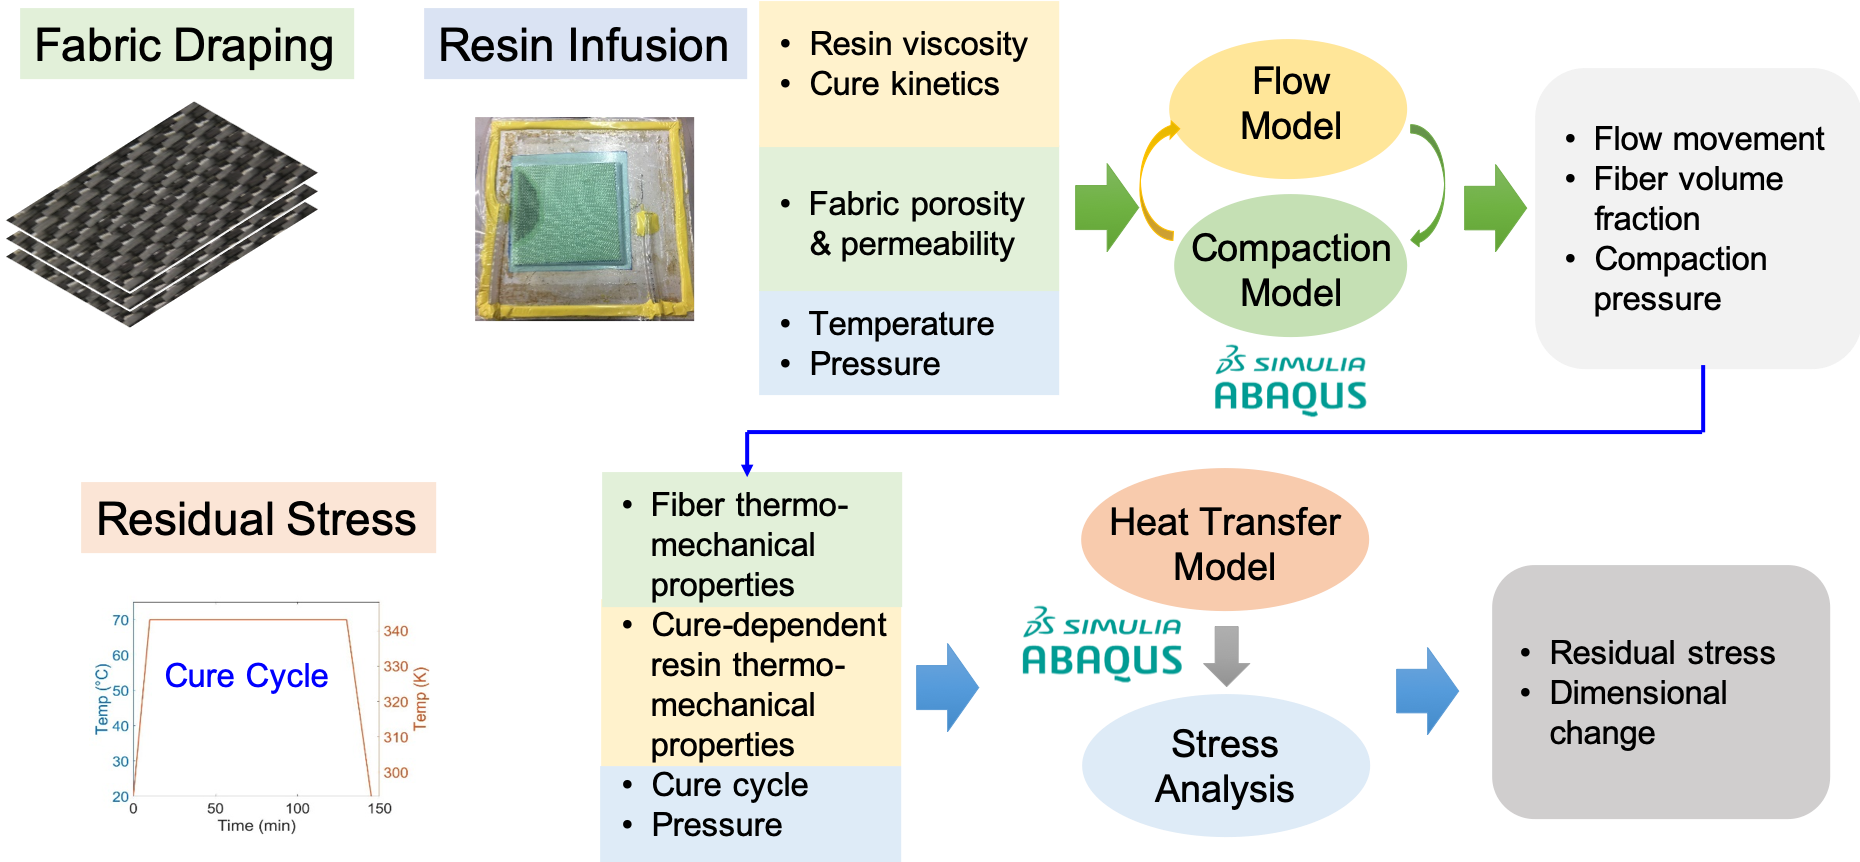 Figure 1. Process Modeling